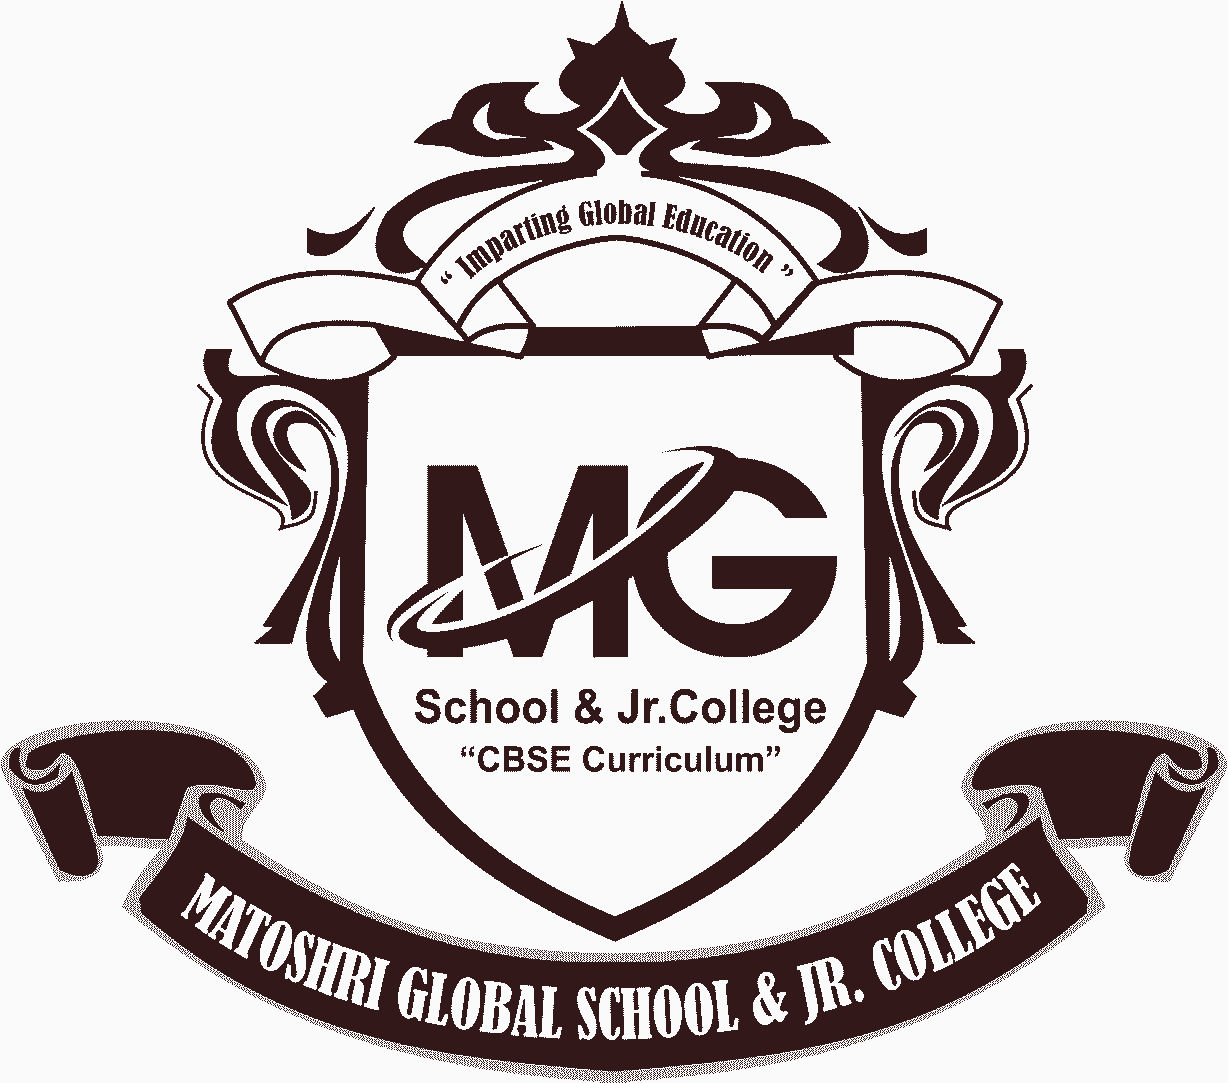 Matoshri Global School & Jr.College